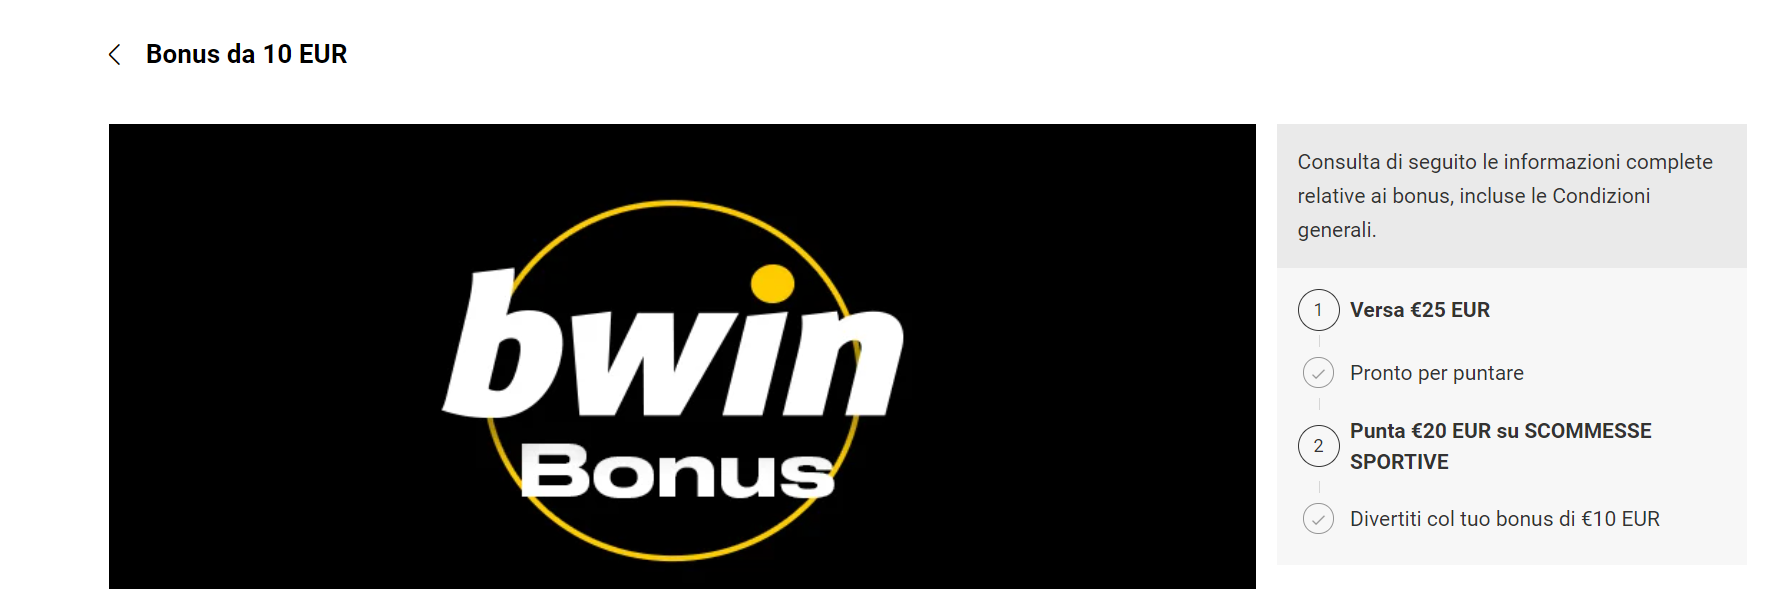 bwin bonus fedeltà 10 euro.png